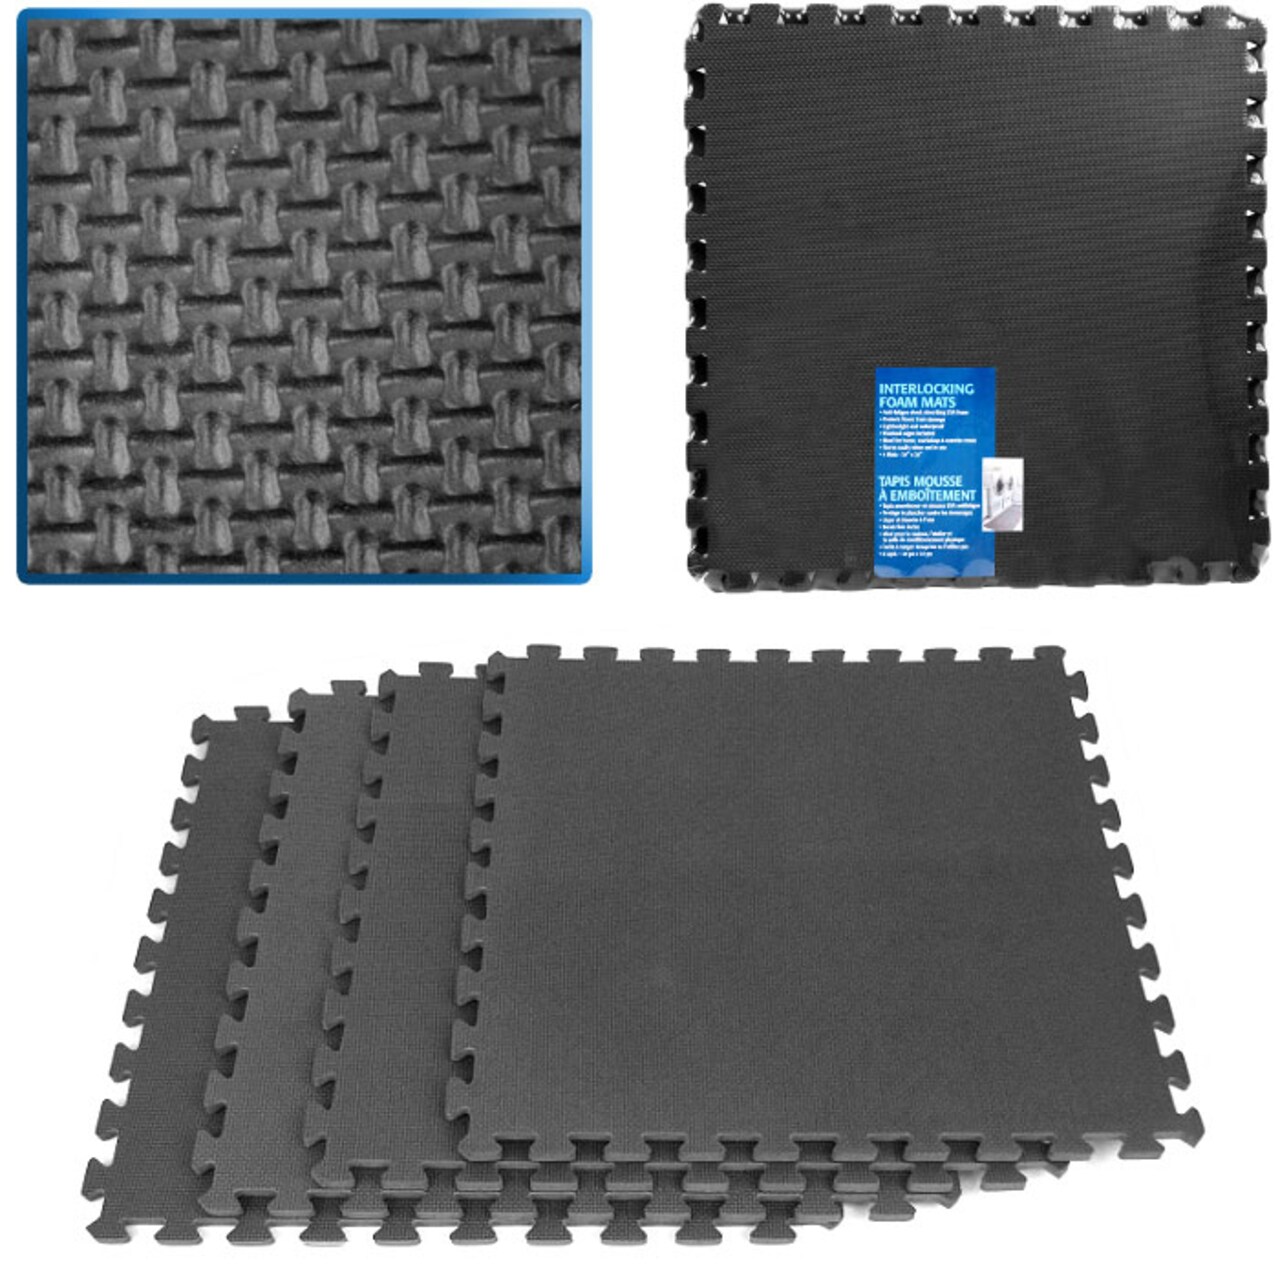 Stalwart Foam Mat Floor Tiles, Interlocking Ultimate Comfort EVA Foam  Padding 4 Pieces that are 2 Square Feet